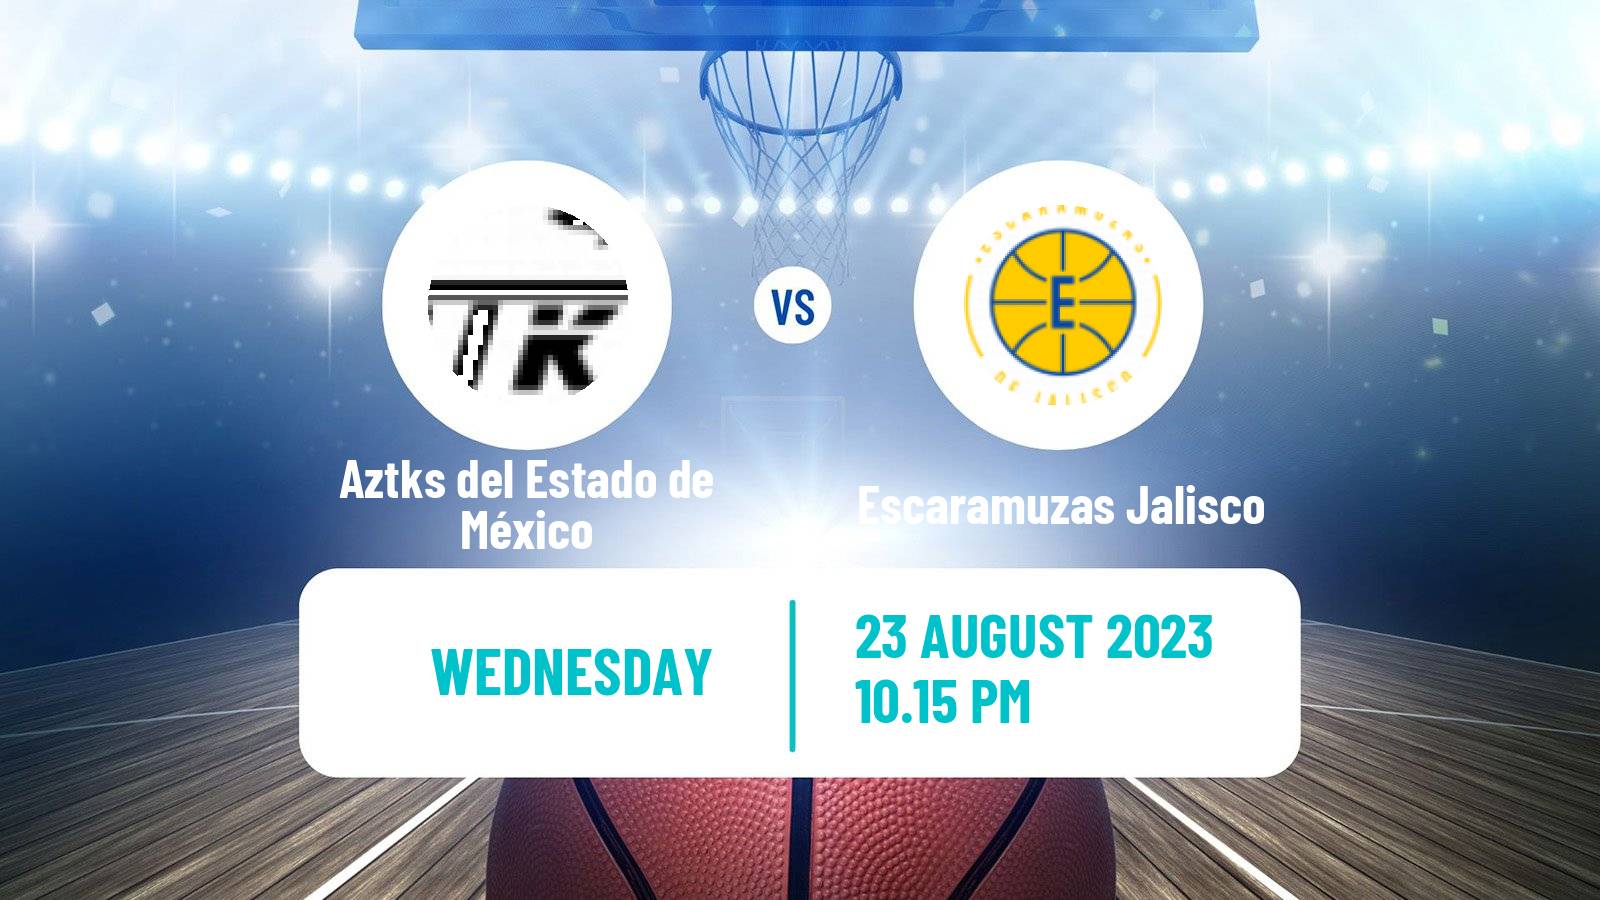 Basketball Club Friendly Basketball Aztks del Estado de México - Escaramuzas Jalisco